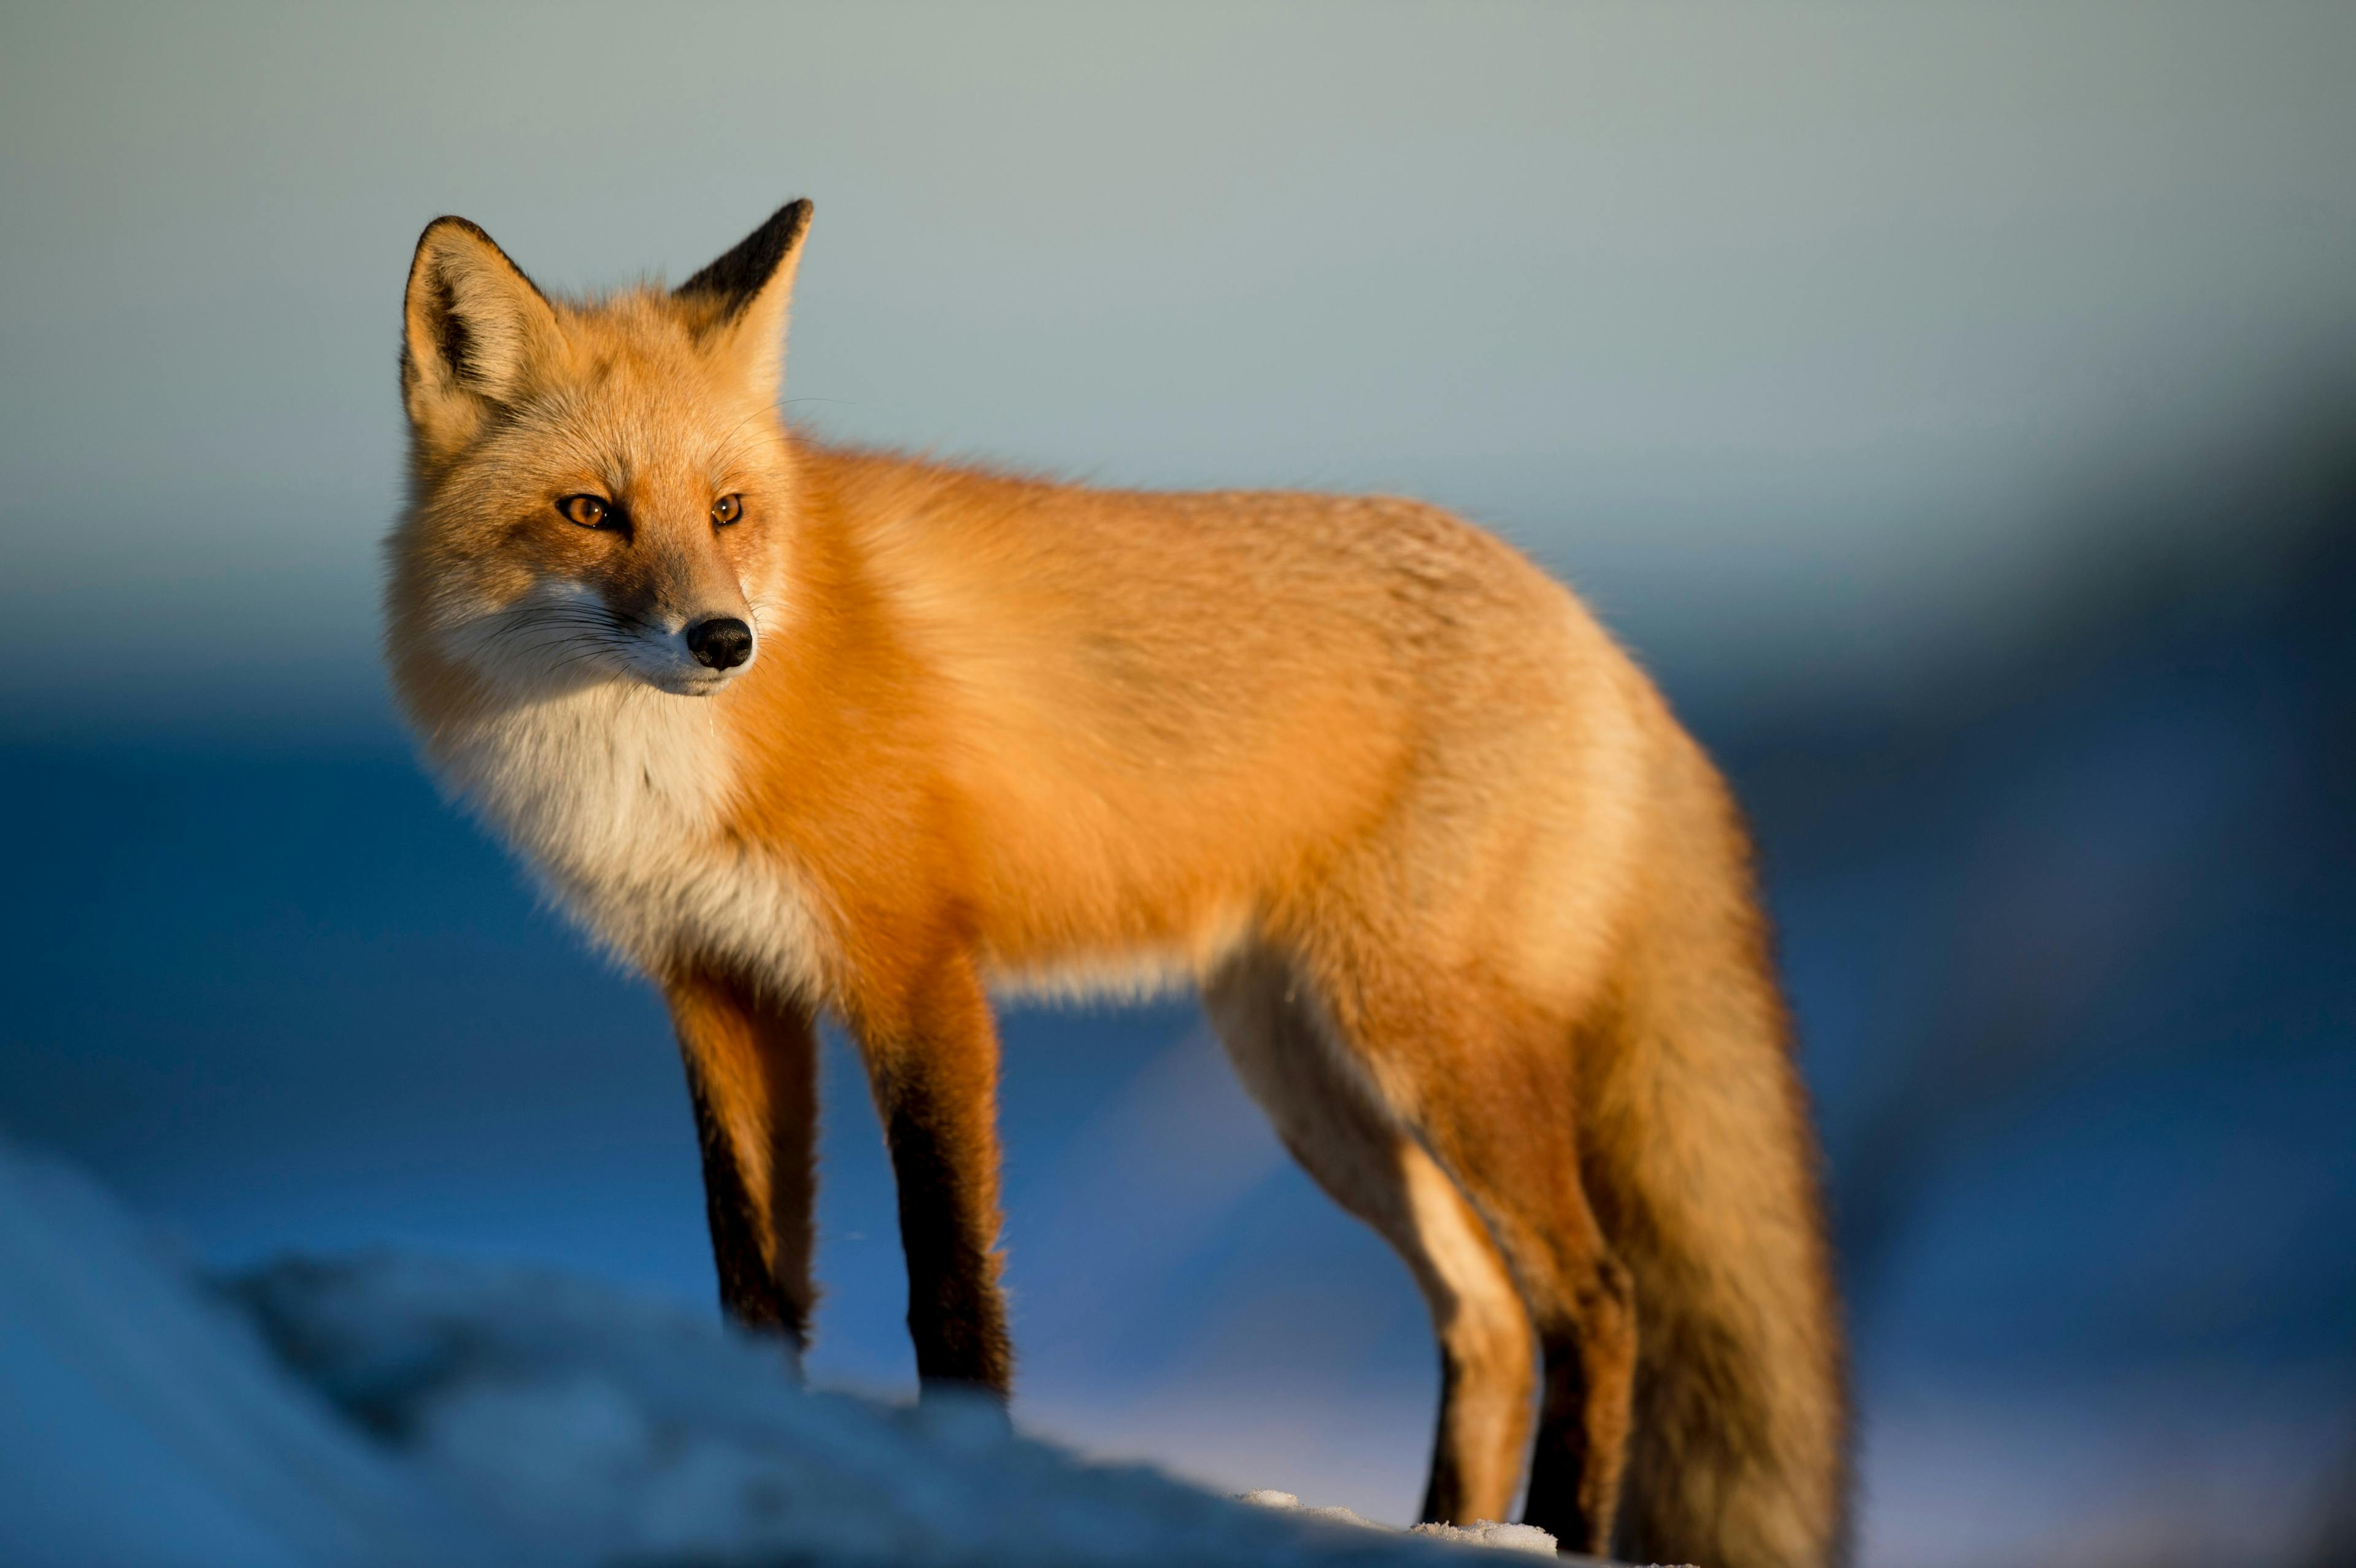 A brown fox on a snowy field